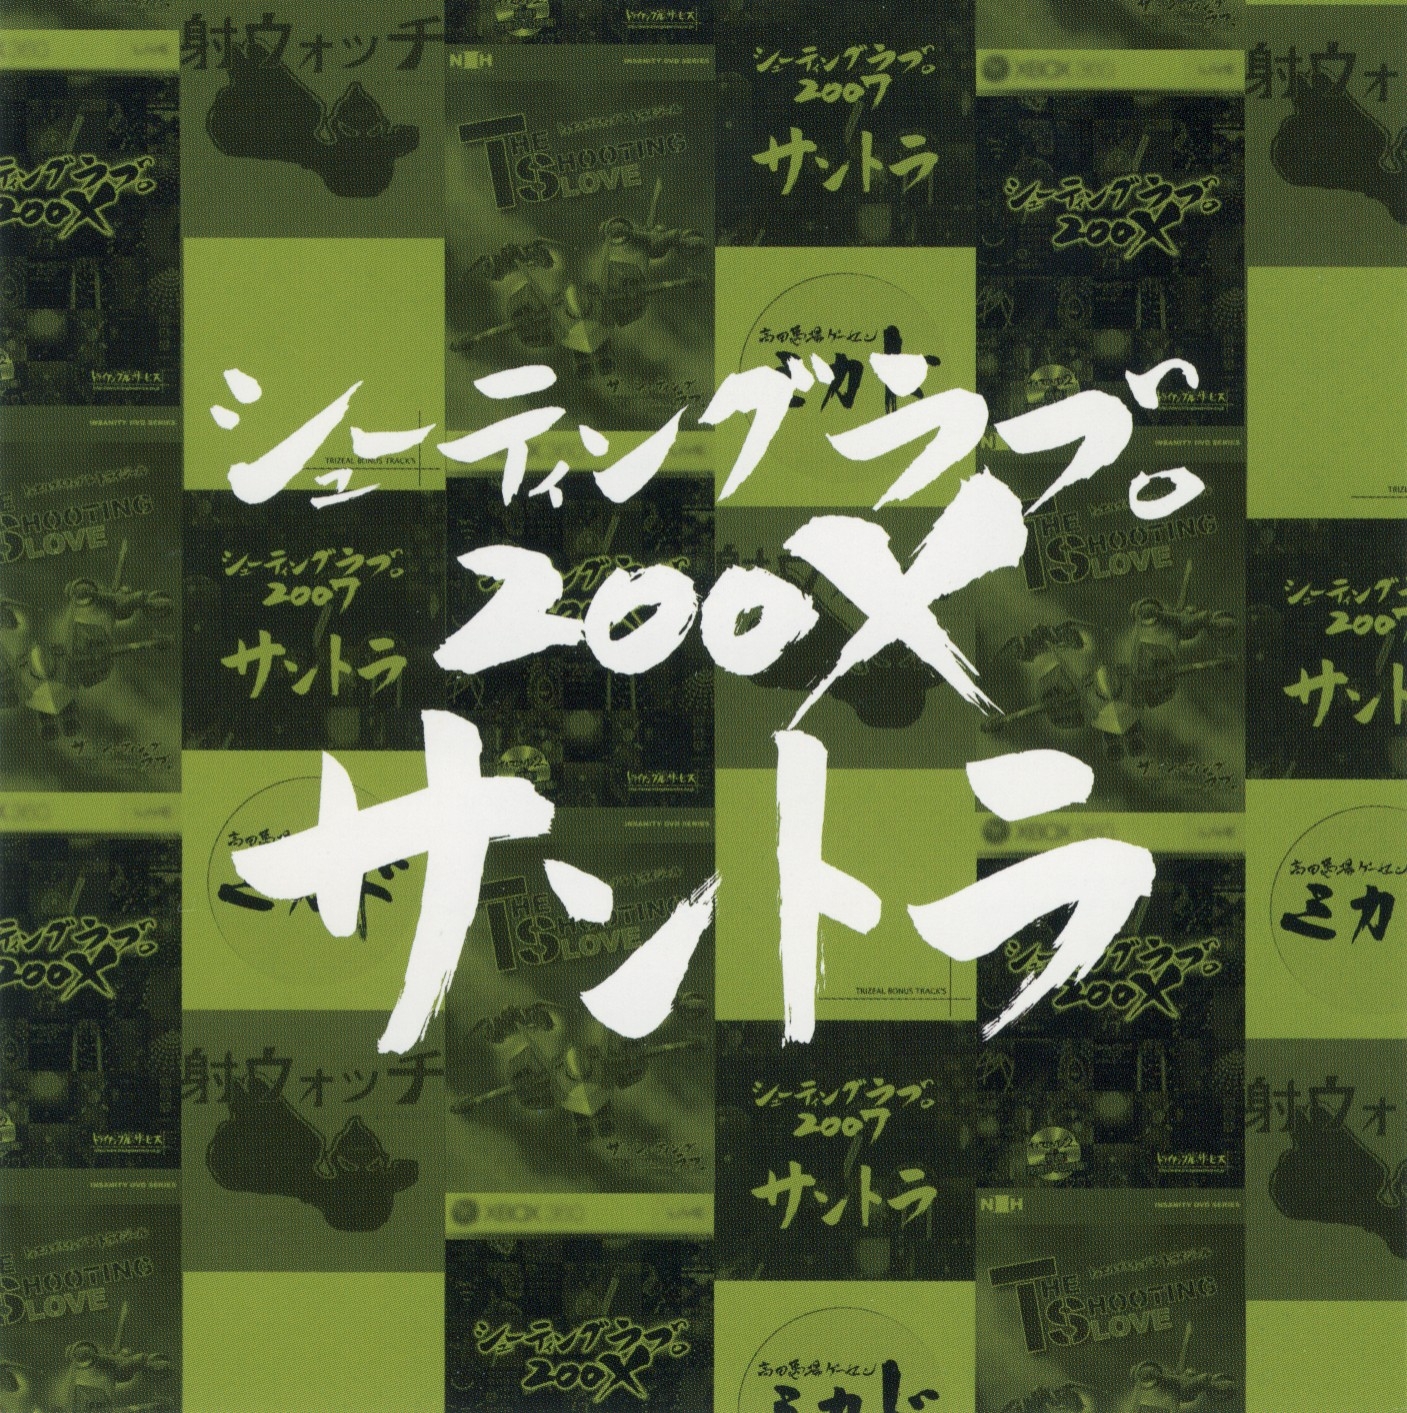 SHOOTING LOVE 200X Original Soundtrack (2010) MP3 - Download